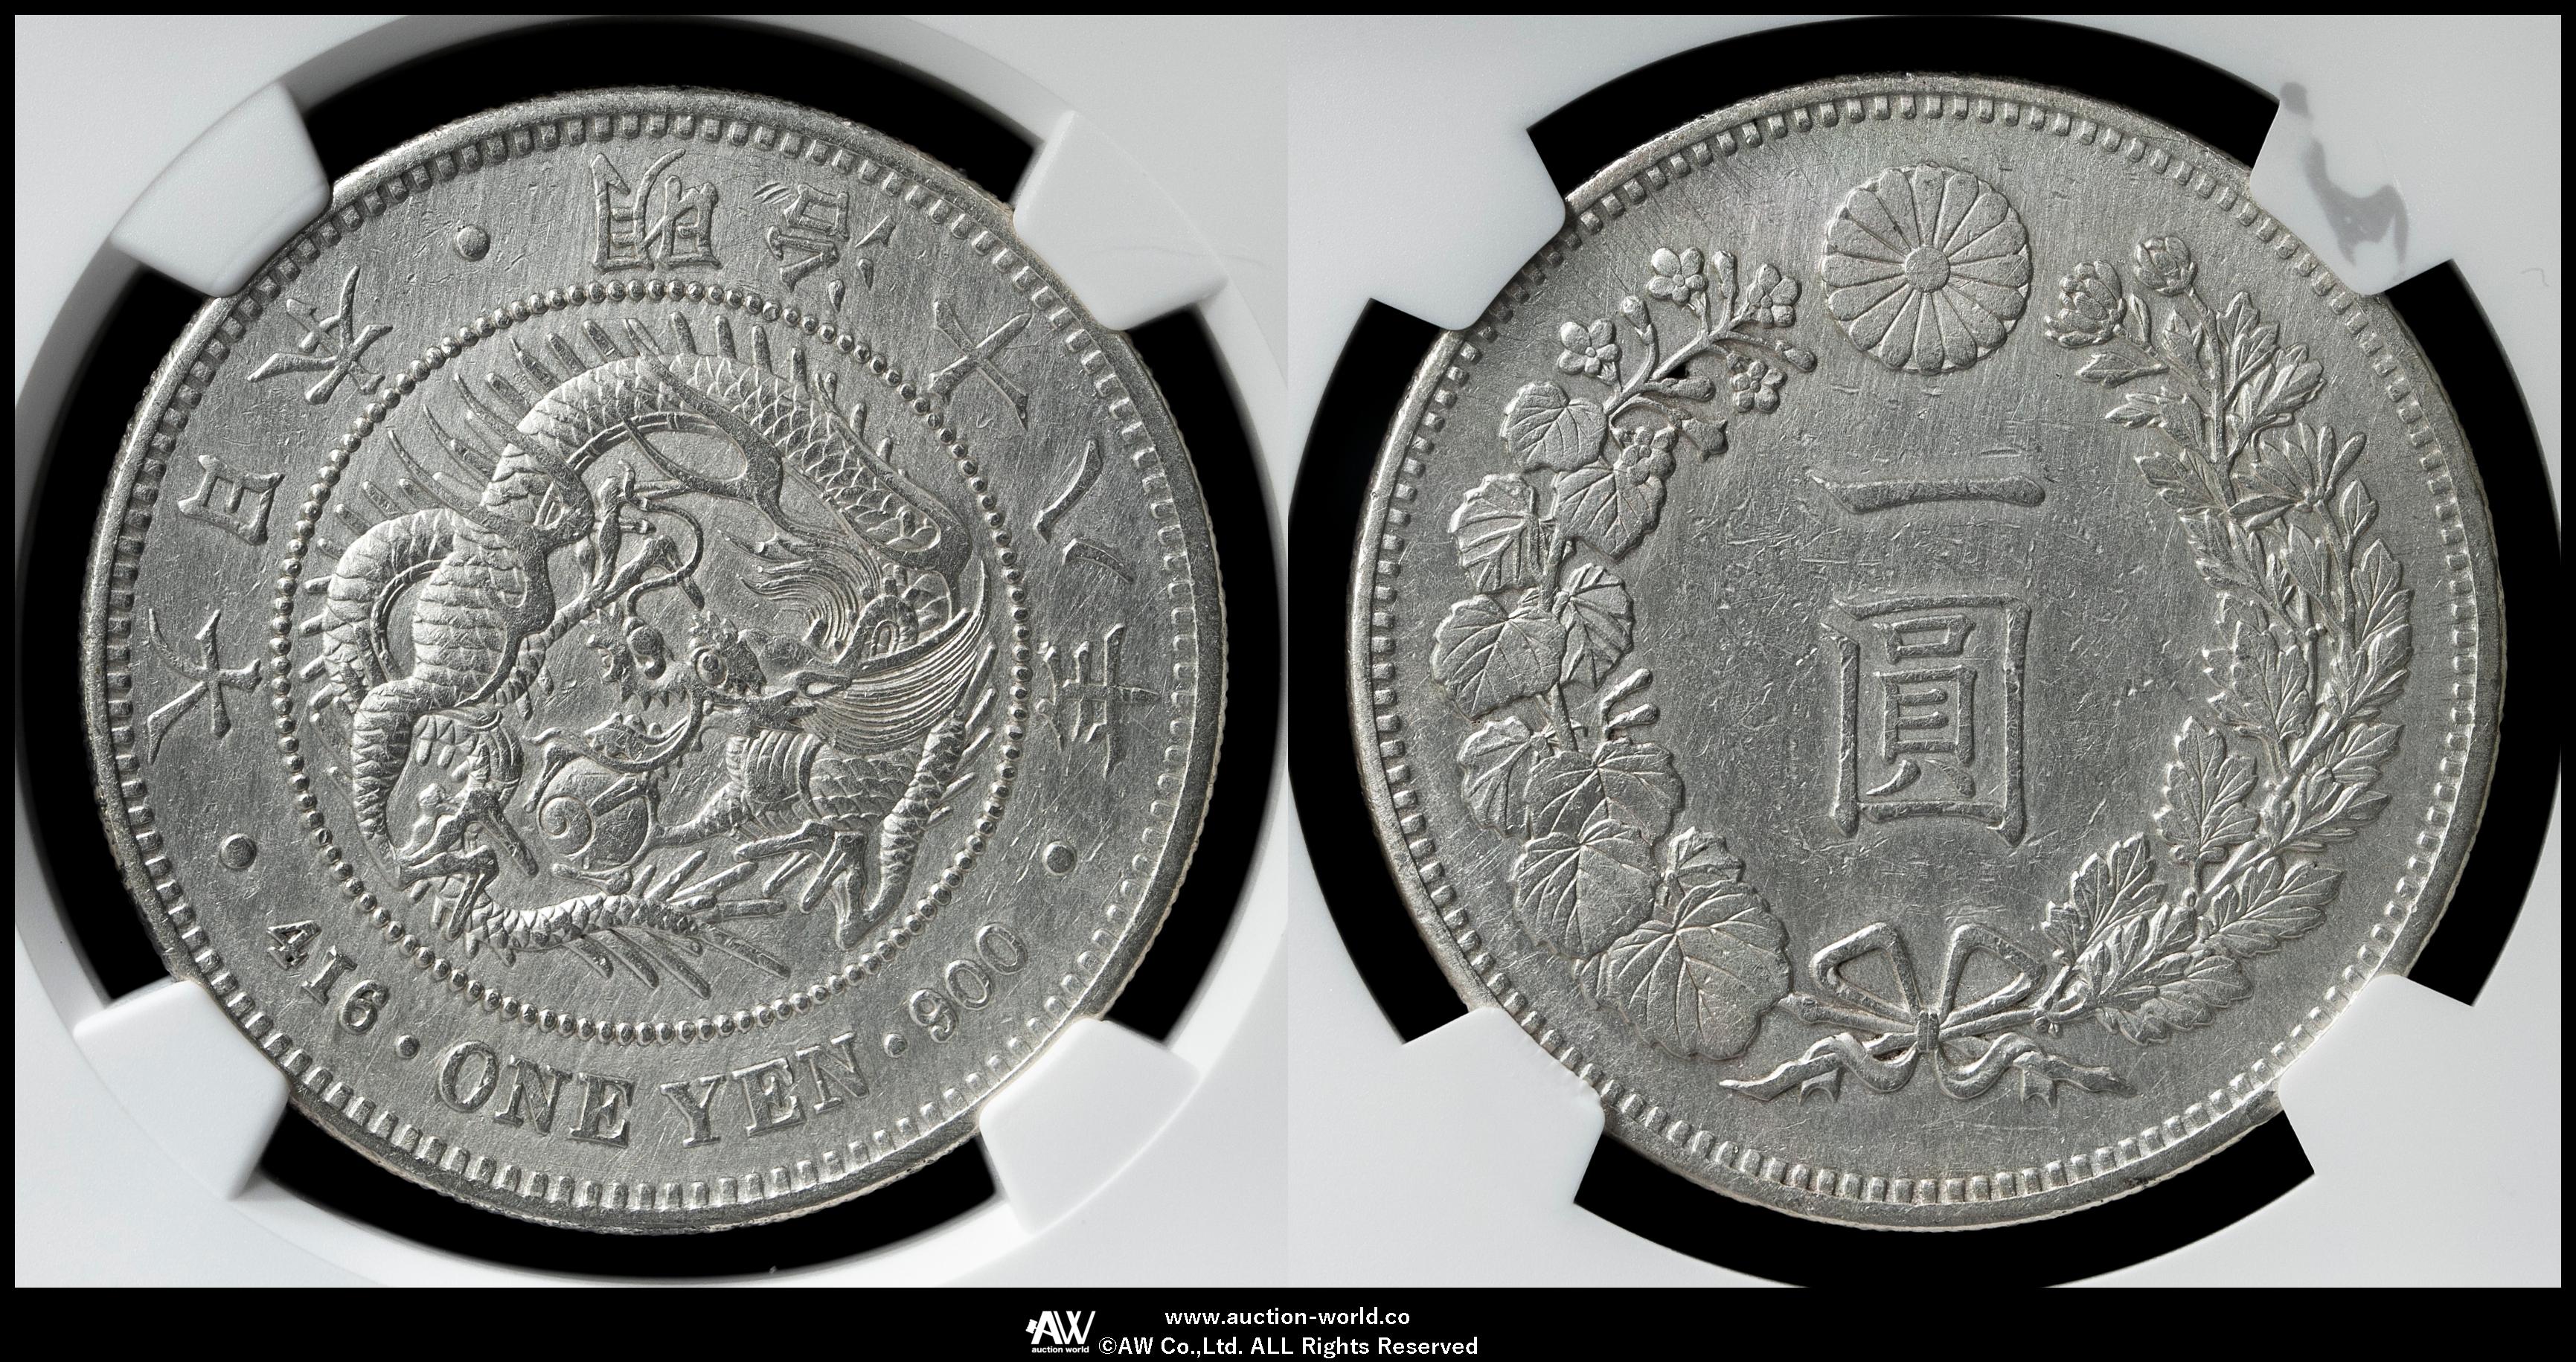 純正卸し売り 『並品』『PCGS AU58』日本明治13大型銀貨(1880年